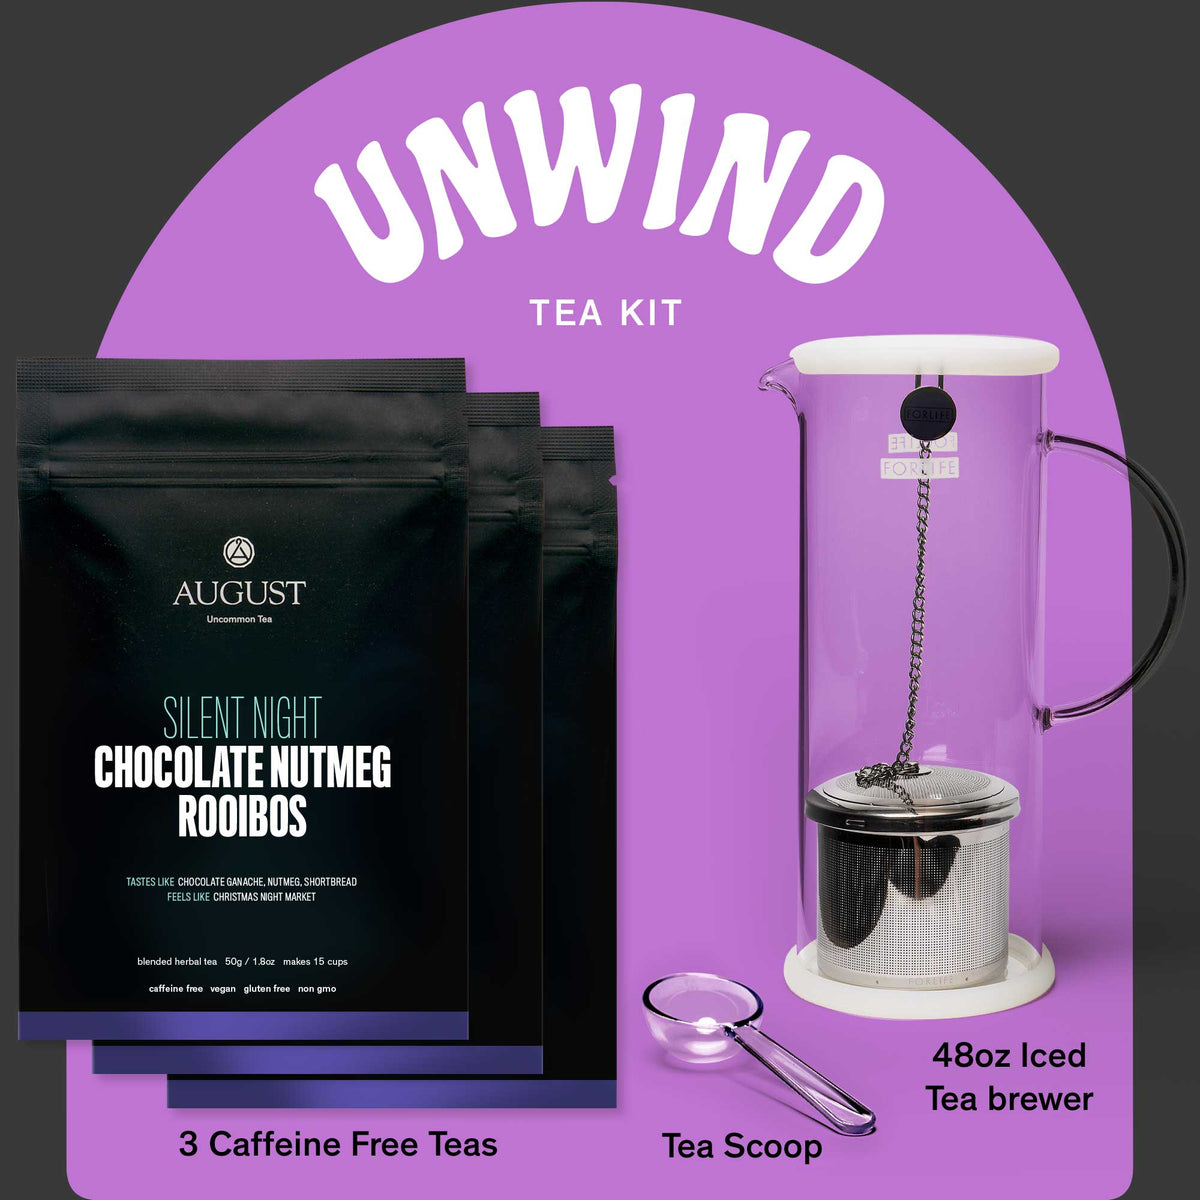 Unwind Tea Kit: 3 Caffeine Free Teas to Relax and De-stress